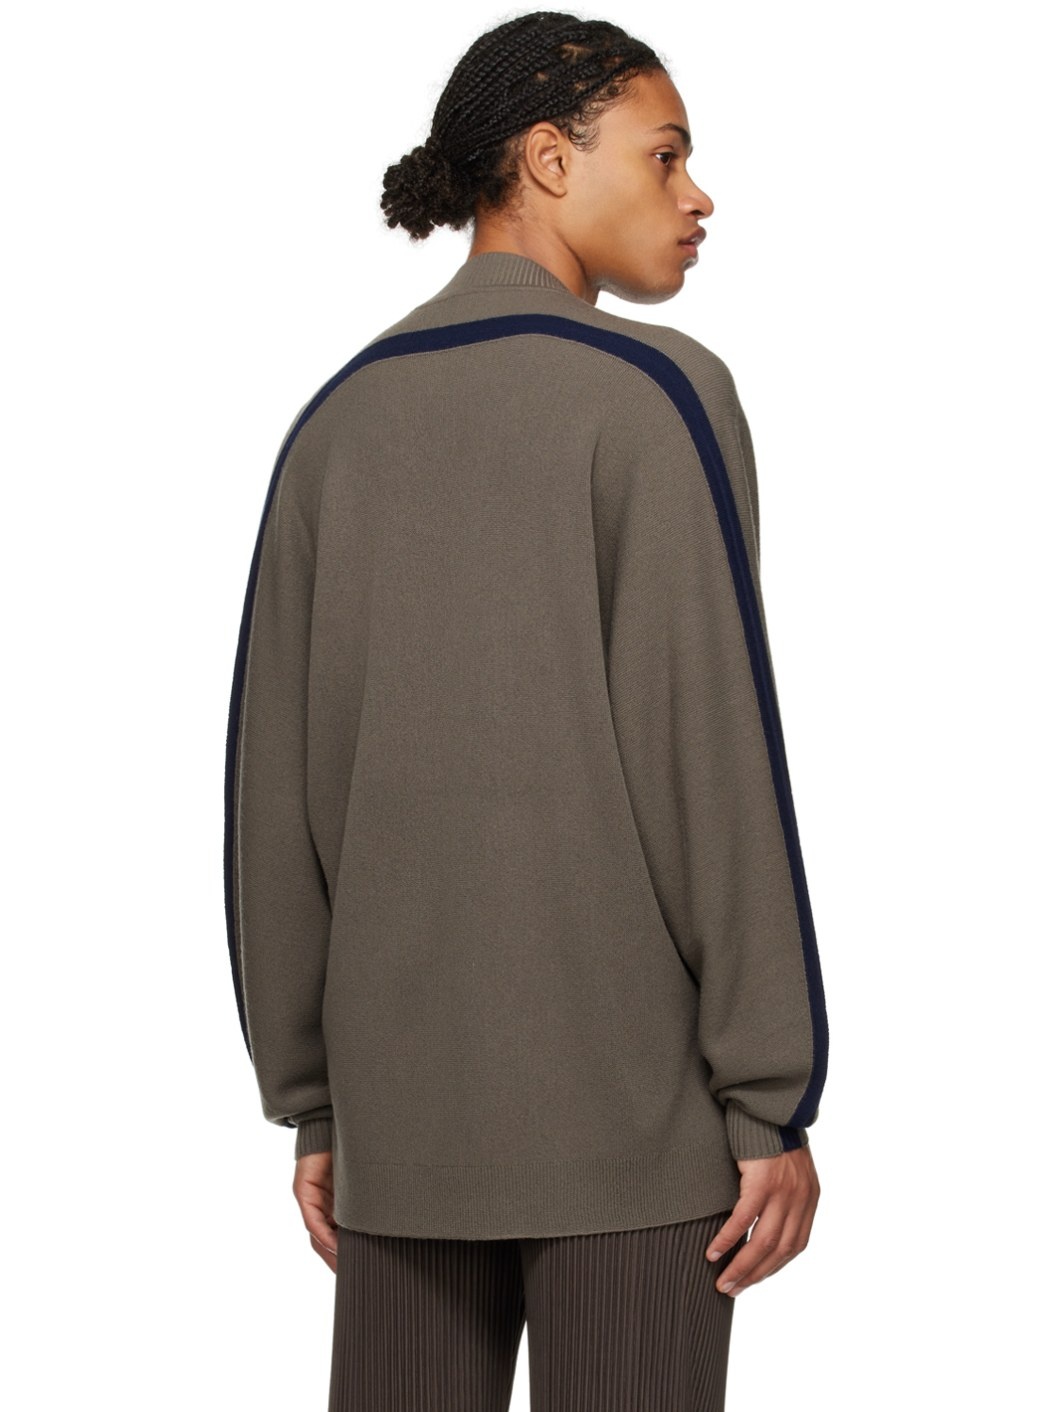 Khaki Framework Sweater - 3